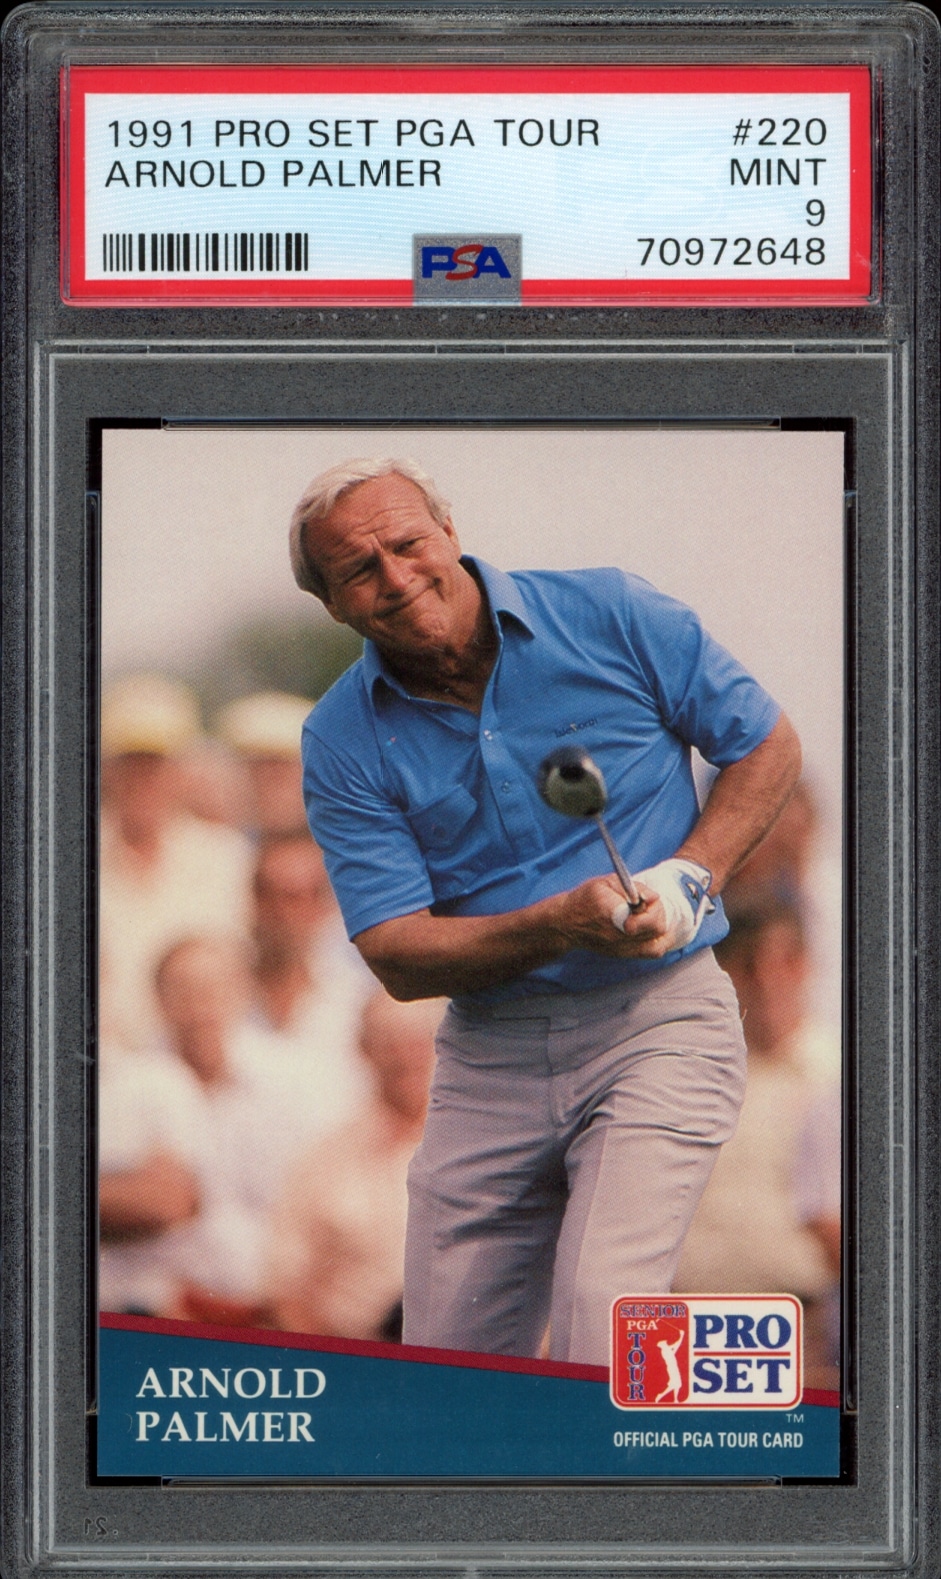 1991 Pro Set PGA Tour card of Arnold Palmer, graded PSA 9, in action.